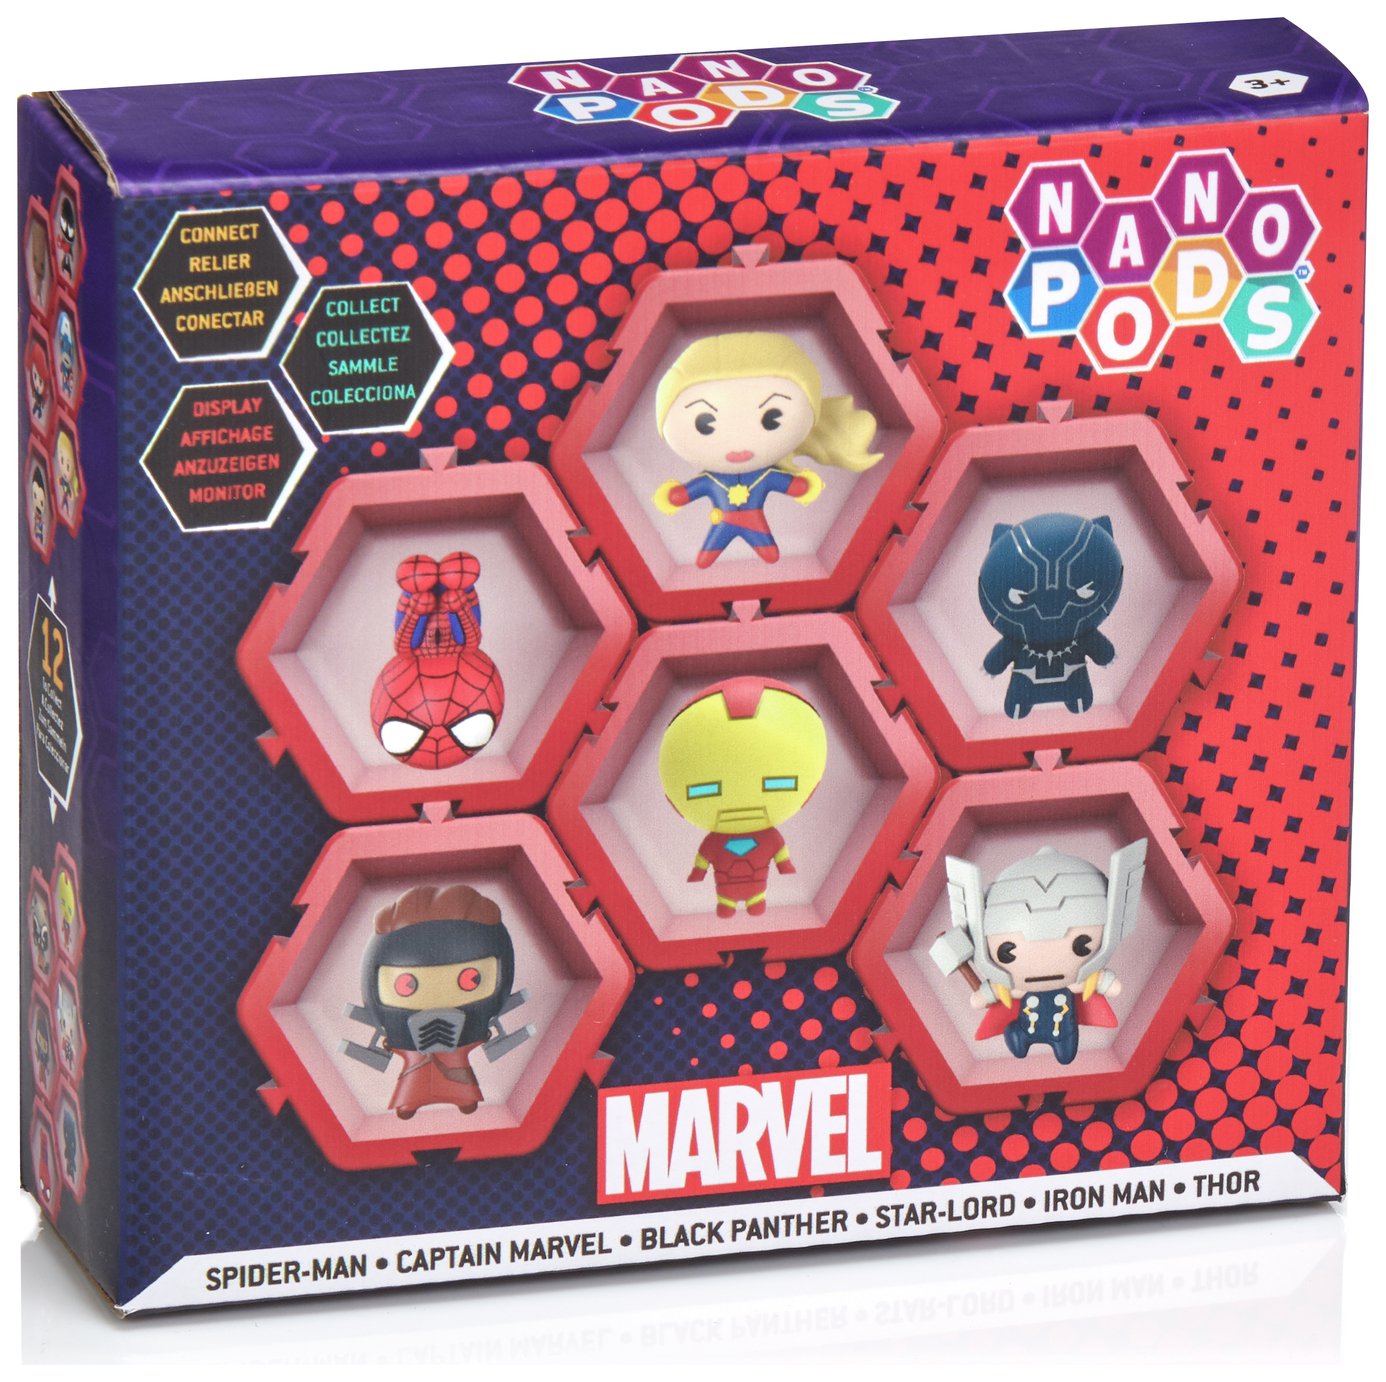 Marvel Mystery Nano Pods-Pack of 6